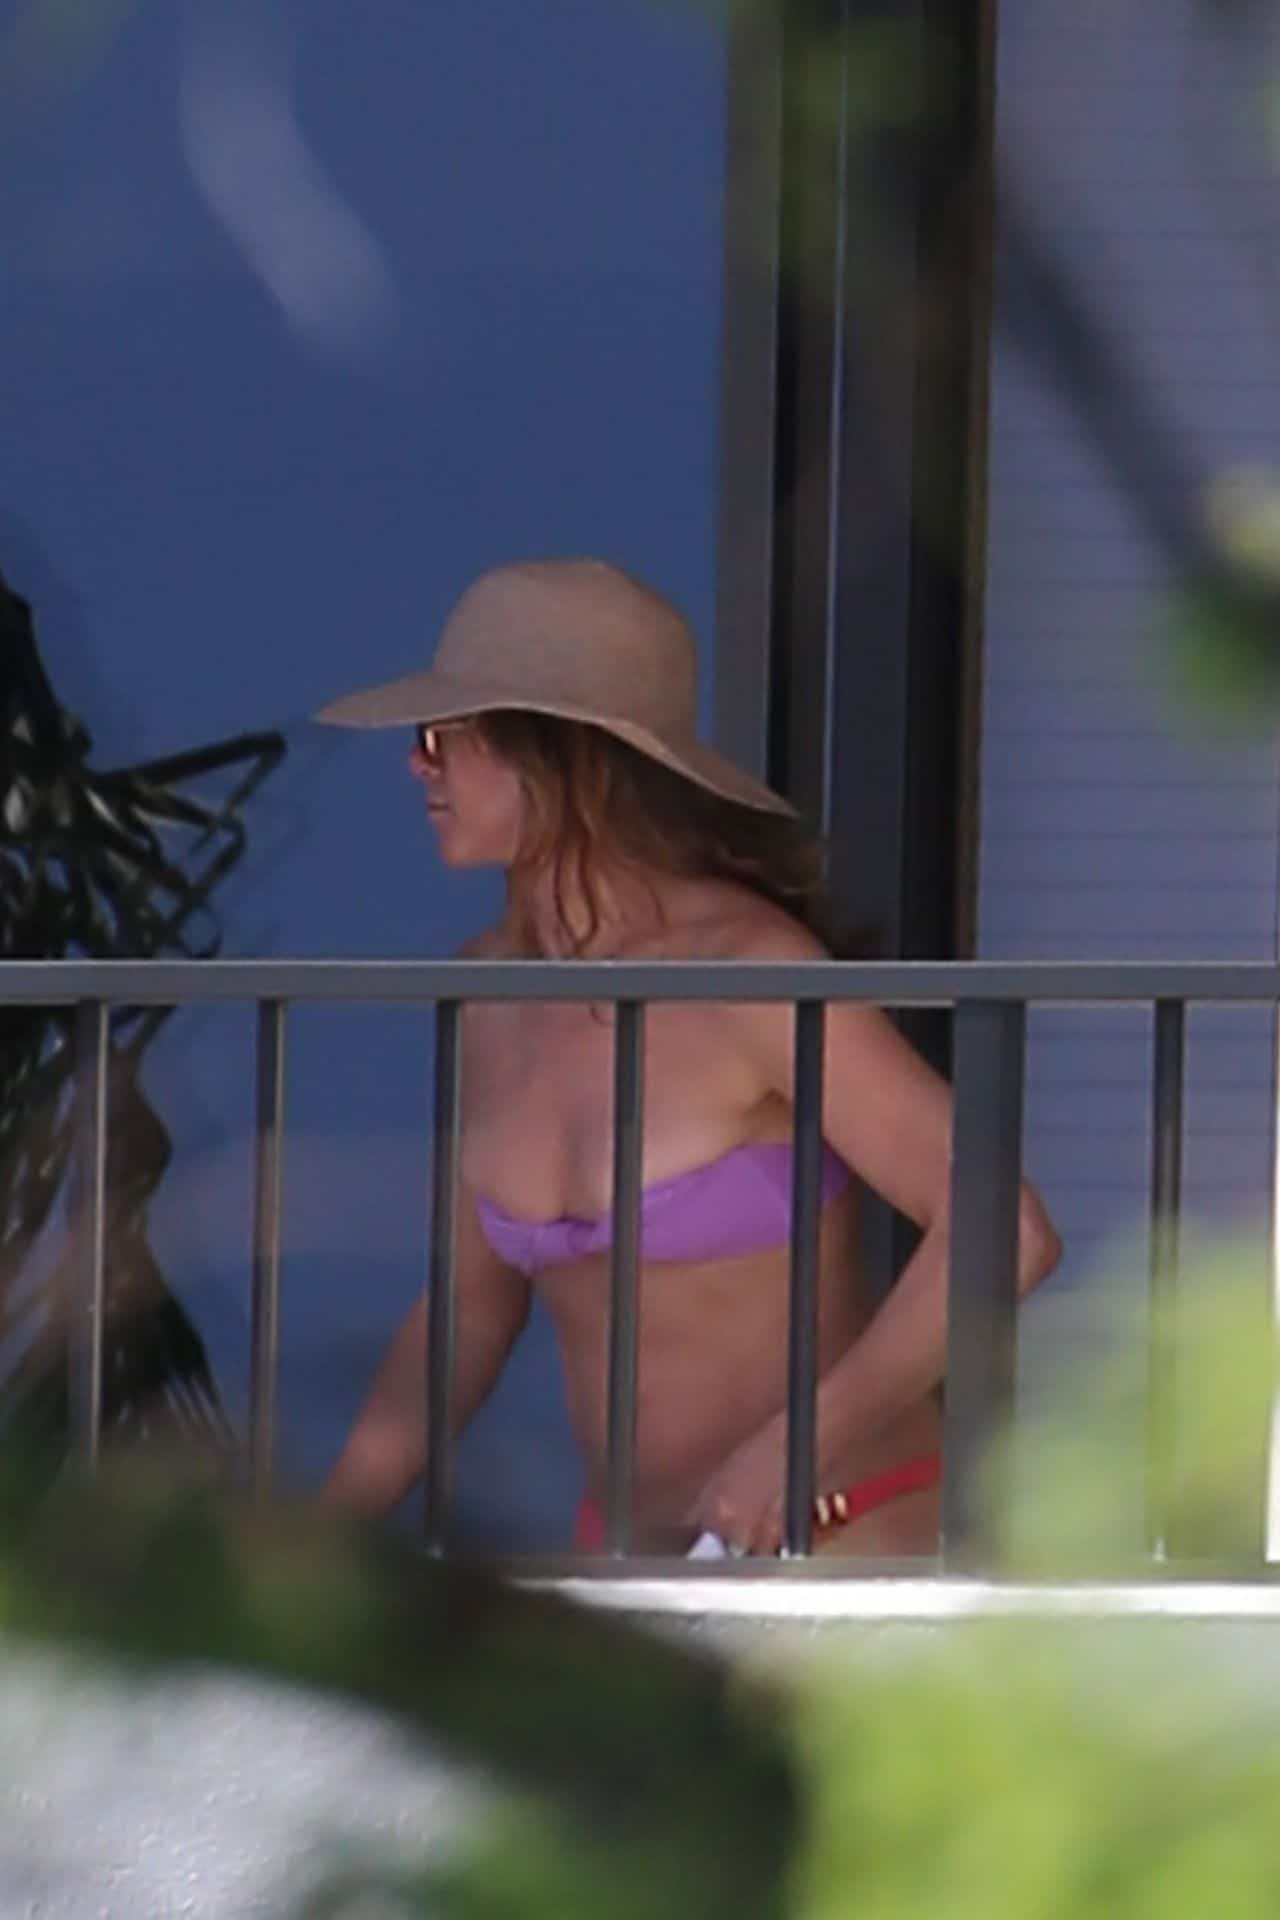 Jennifer Aniston Wears a Tiny Bikini During a Break from Filming in Hawaii